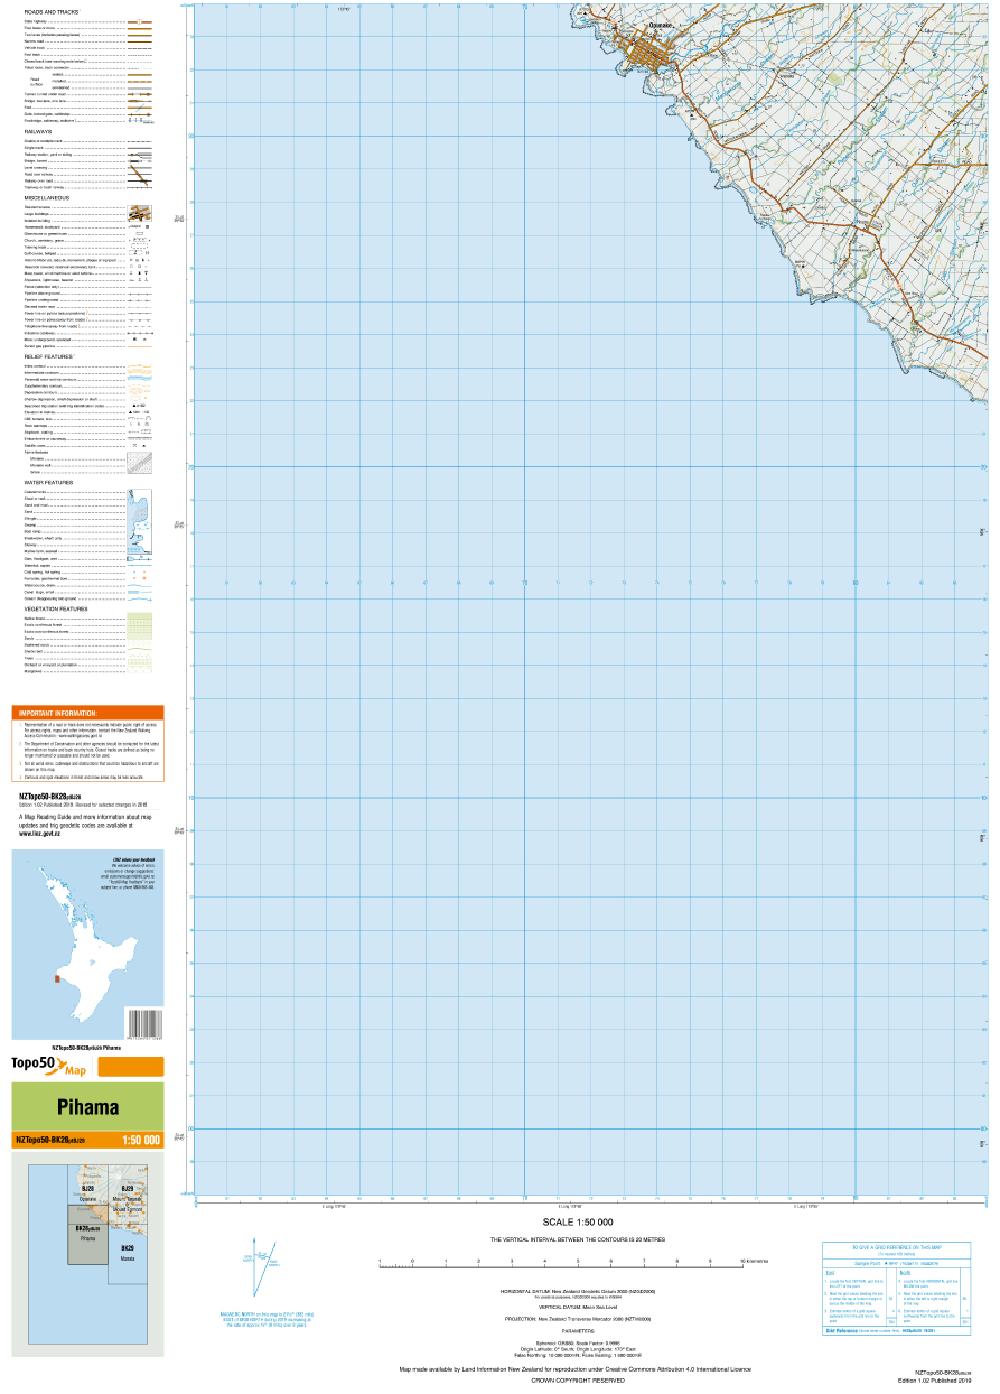 Topo map of Pihama